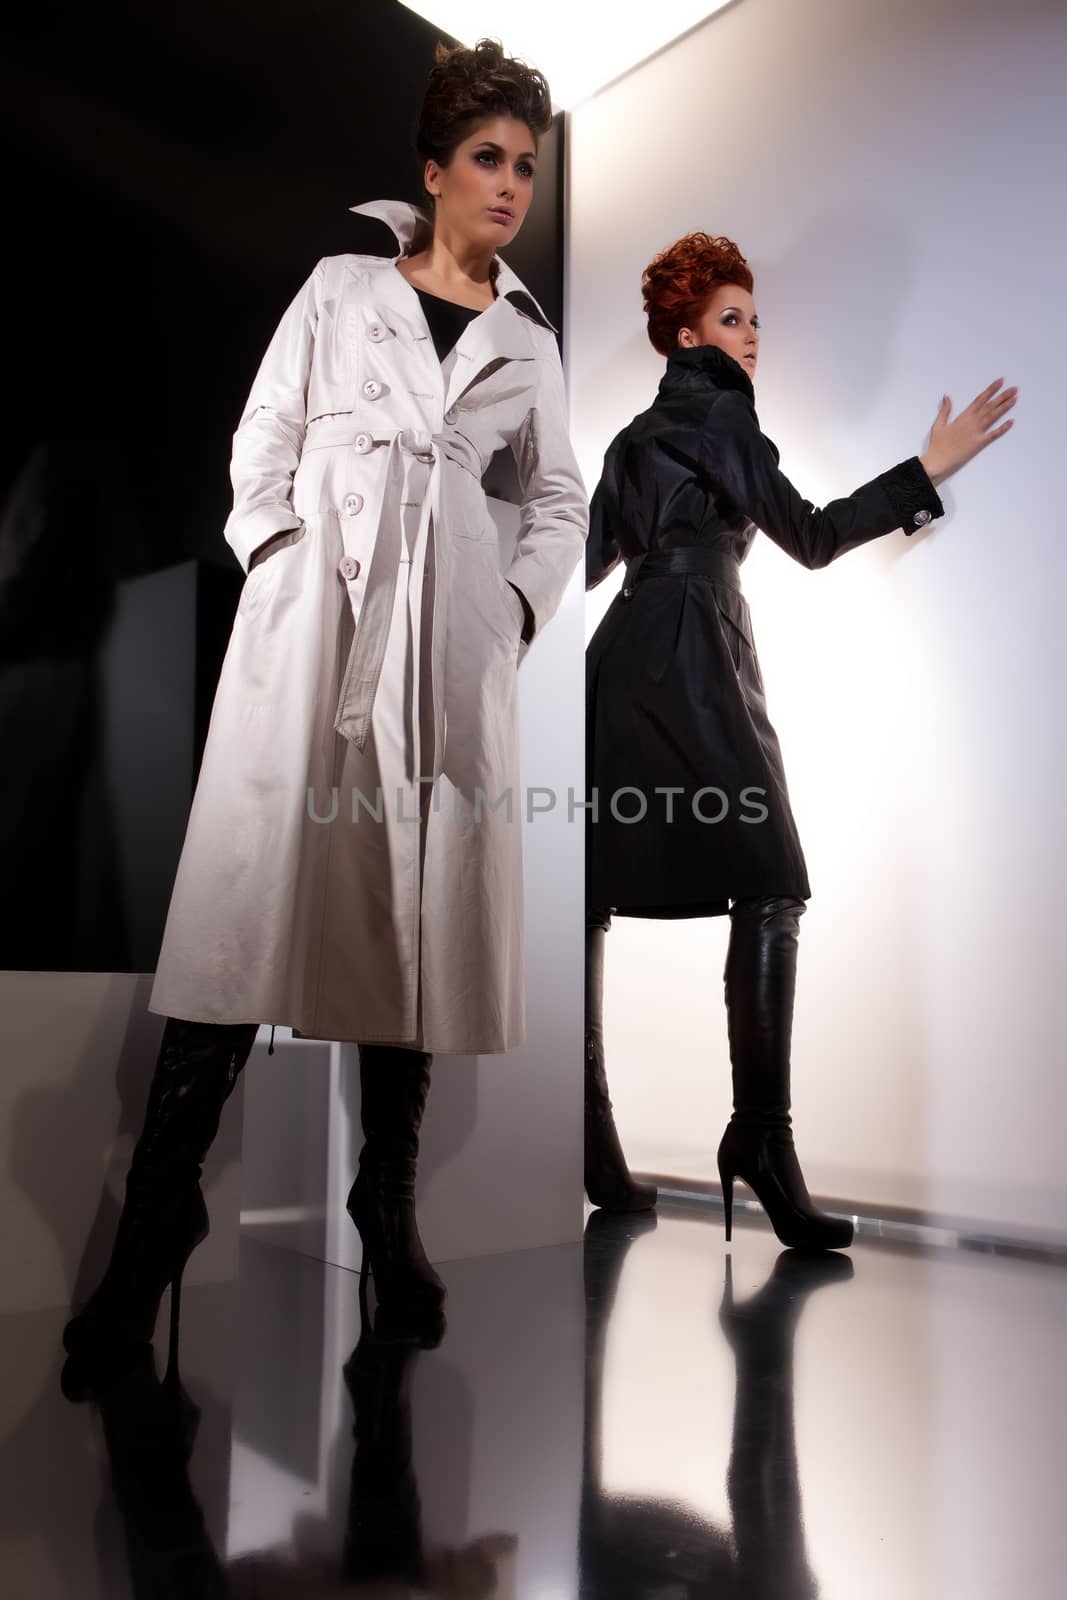 Two Young Beautiful Women In Fashionable Clothing by Fotoskat